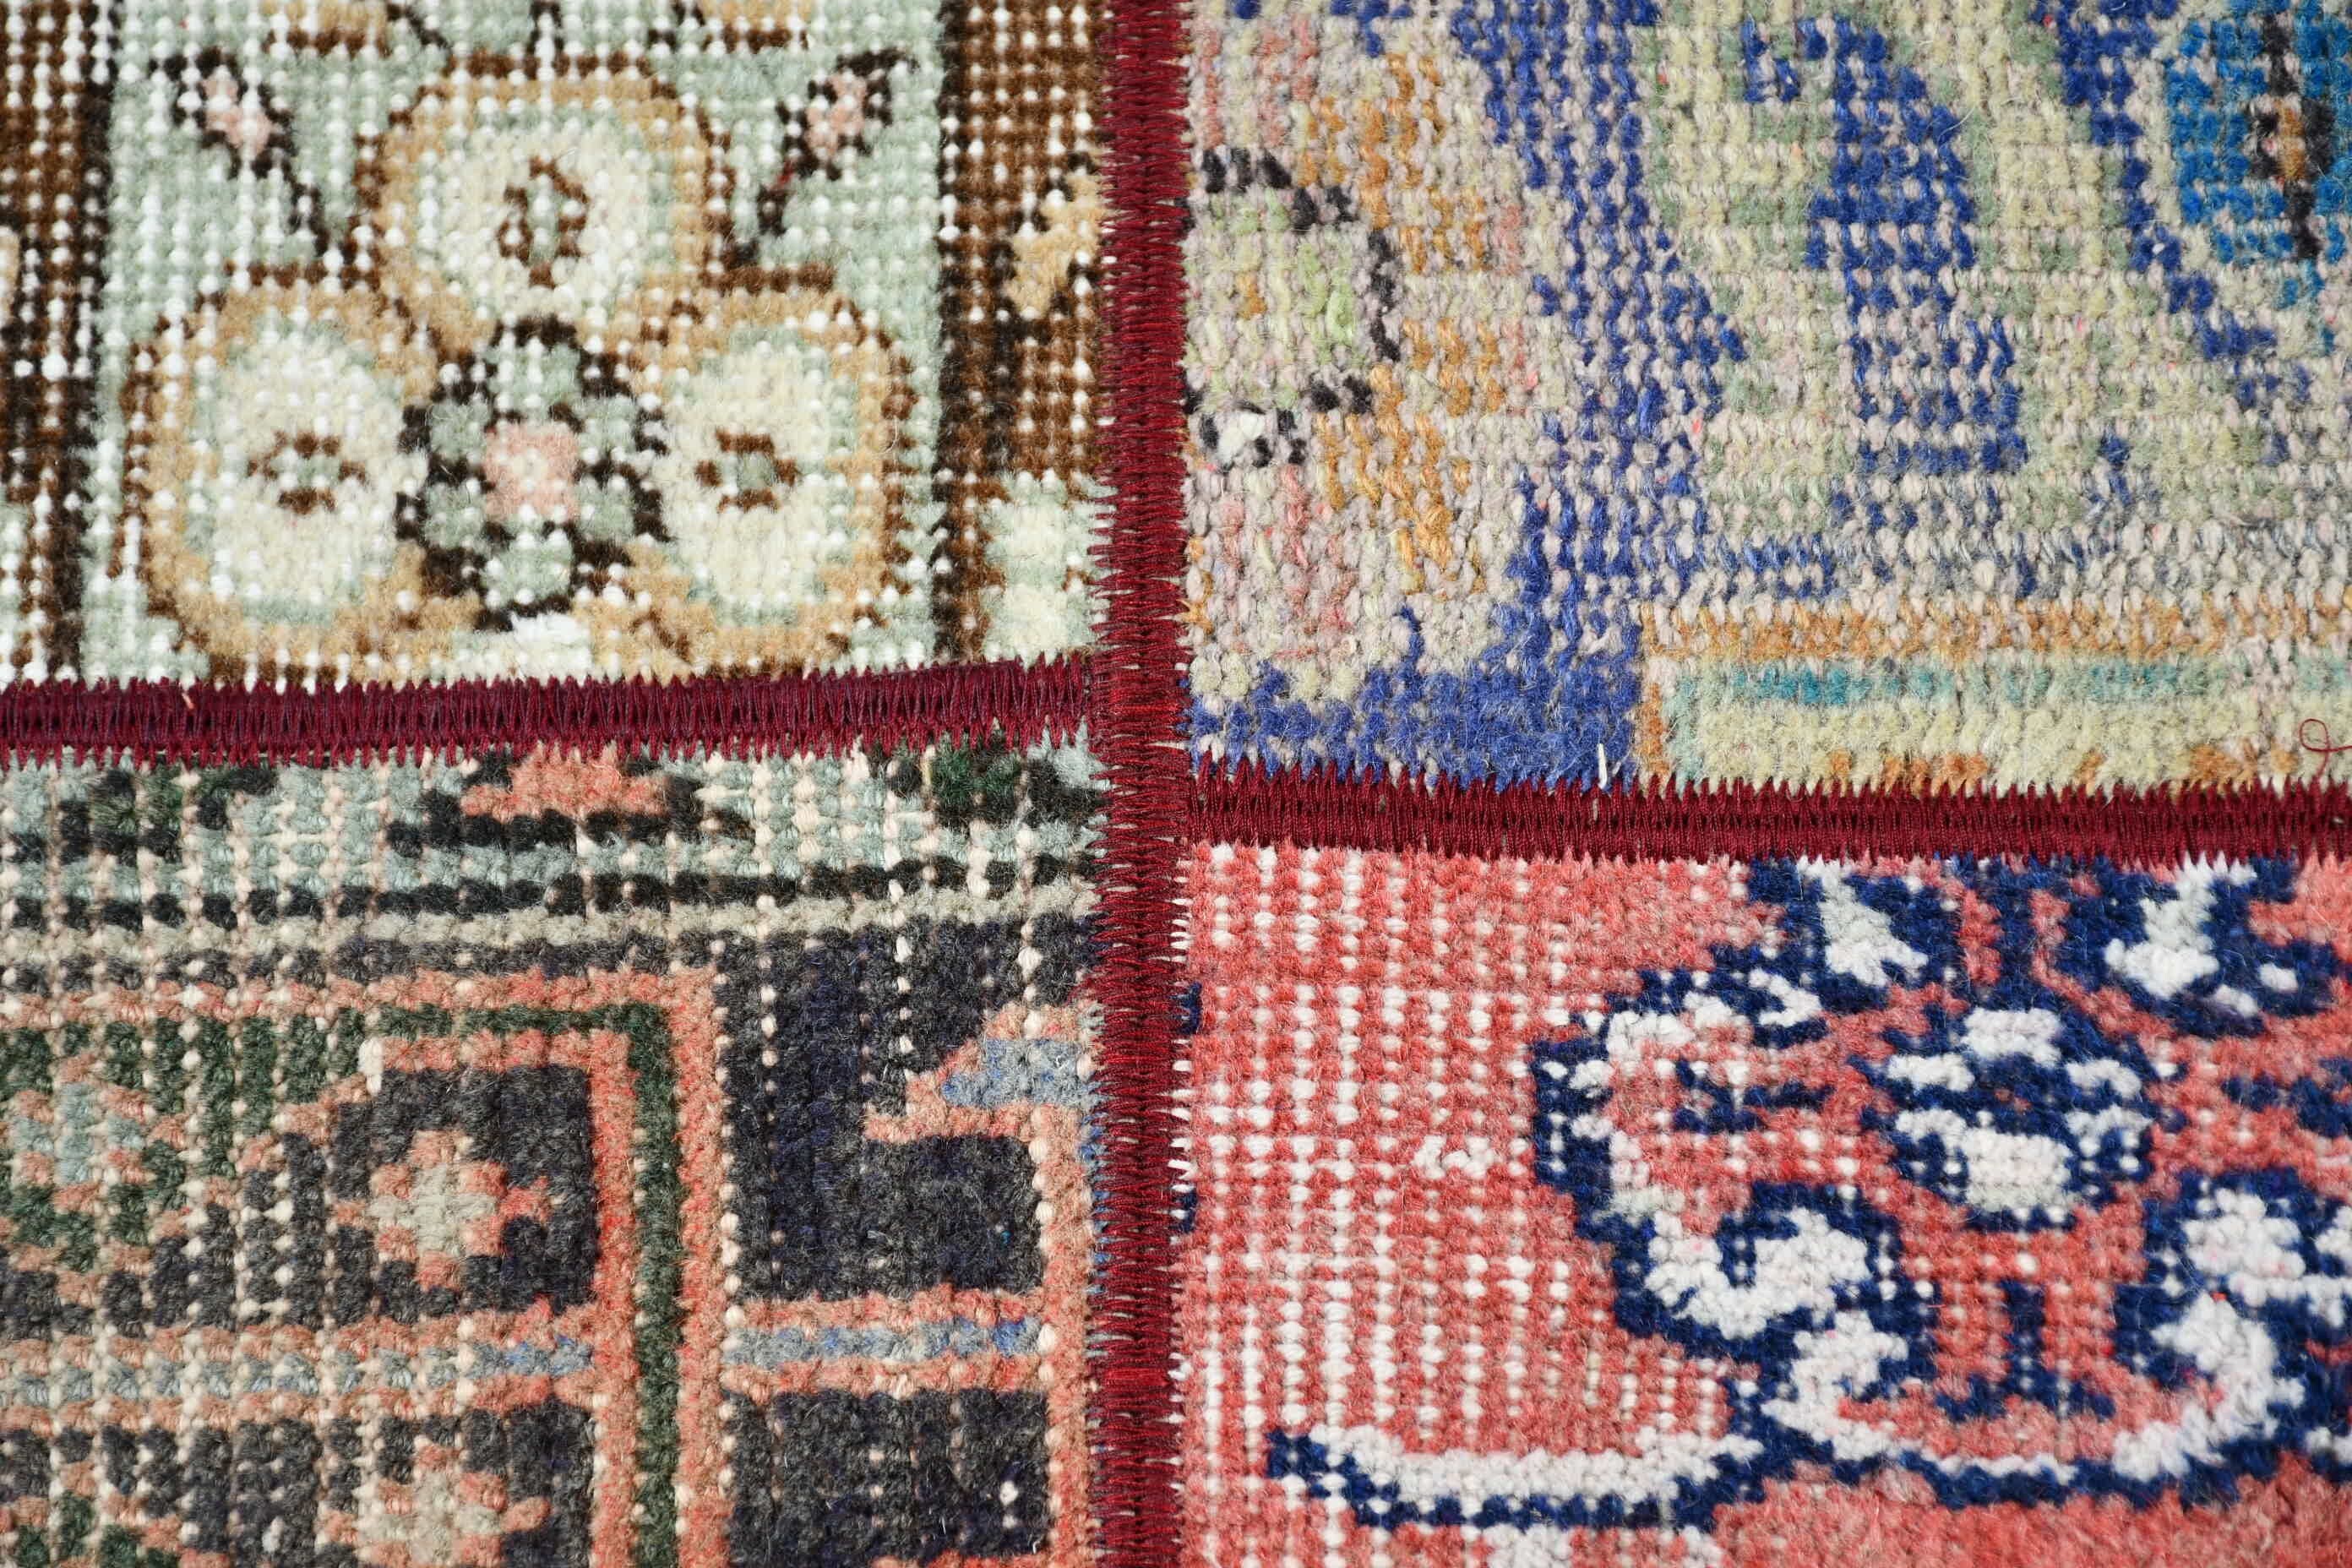 Vintage Rug, Brown Kitchen Rugs, Rugs for Runner, Corridor Rug, Turkish Rug, Old Rug, Antique Rug, 2.8x9.5 ft Runner Rugs, Moroccan Rugs